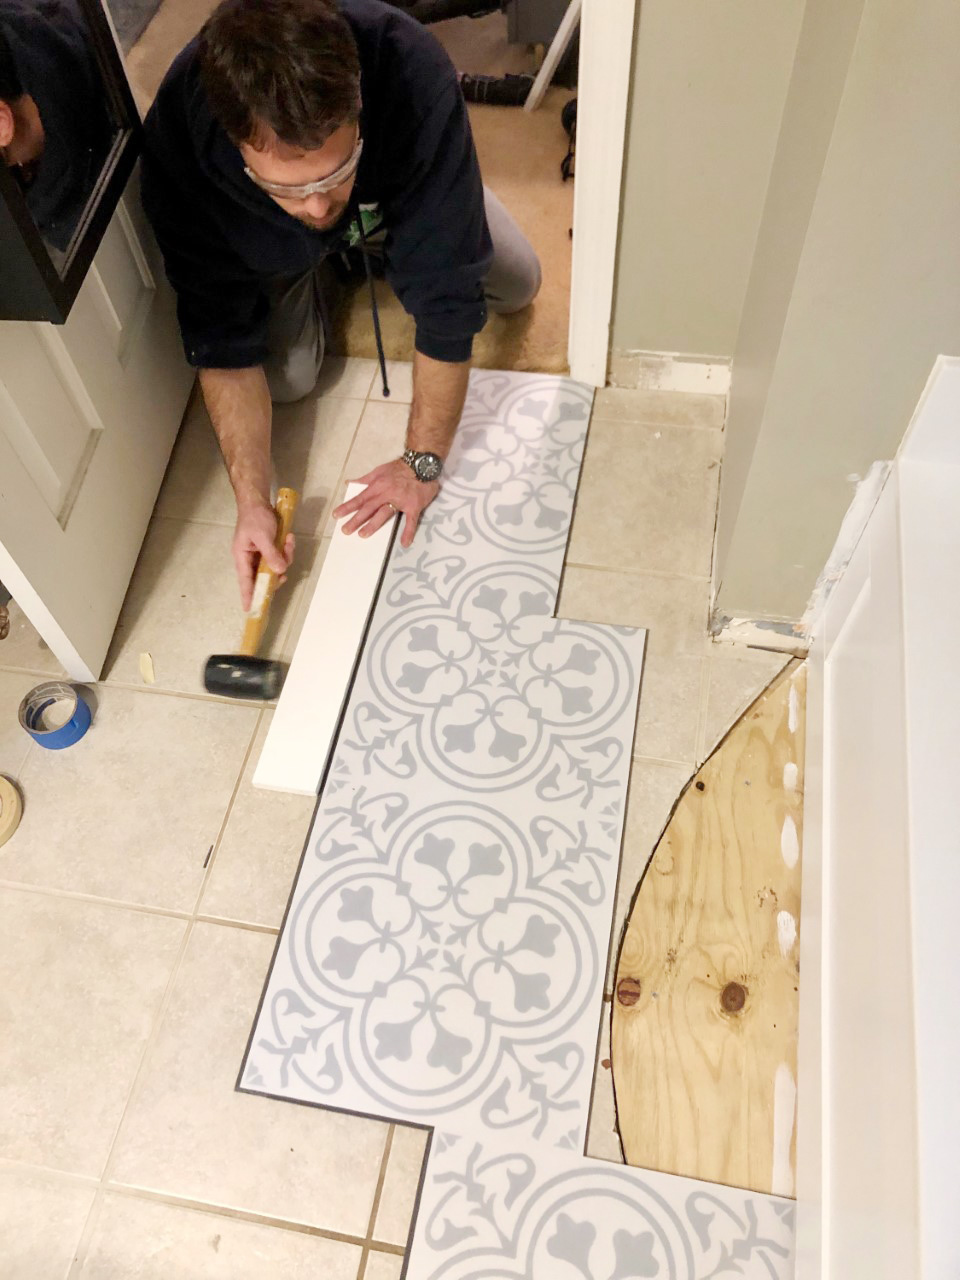 Lvt Flooring Over Existing Tile The, Installing Luxury Vinyl Plank Flooring In Bathroom